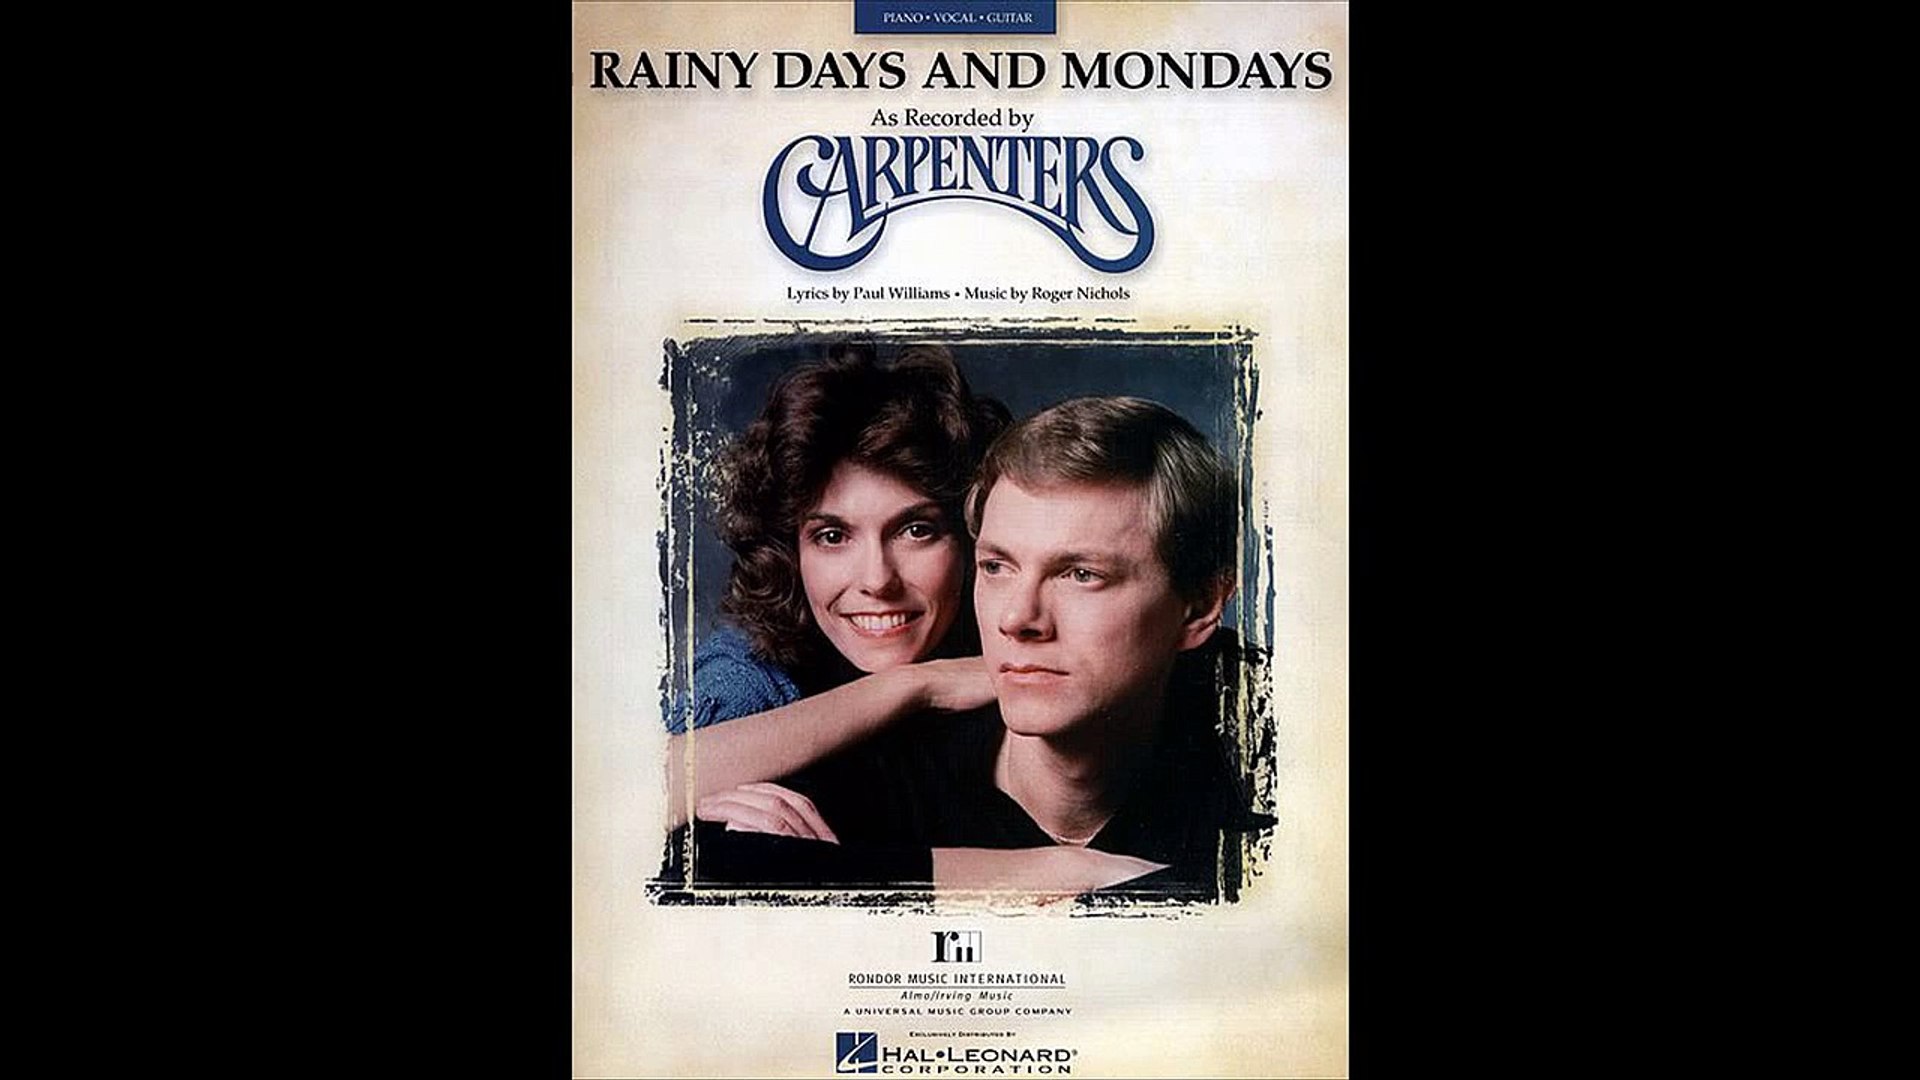 Rainy Days & Mondays - The Carpenters Story Tour Dates & Tickets